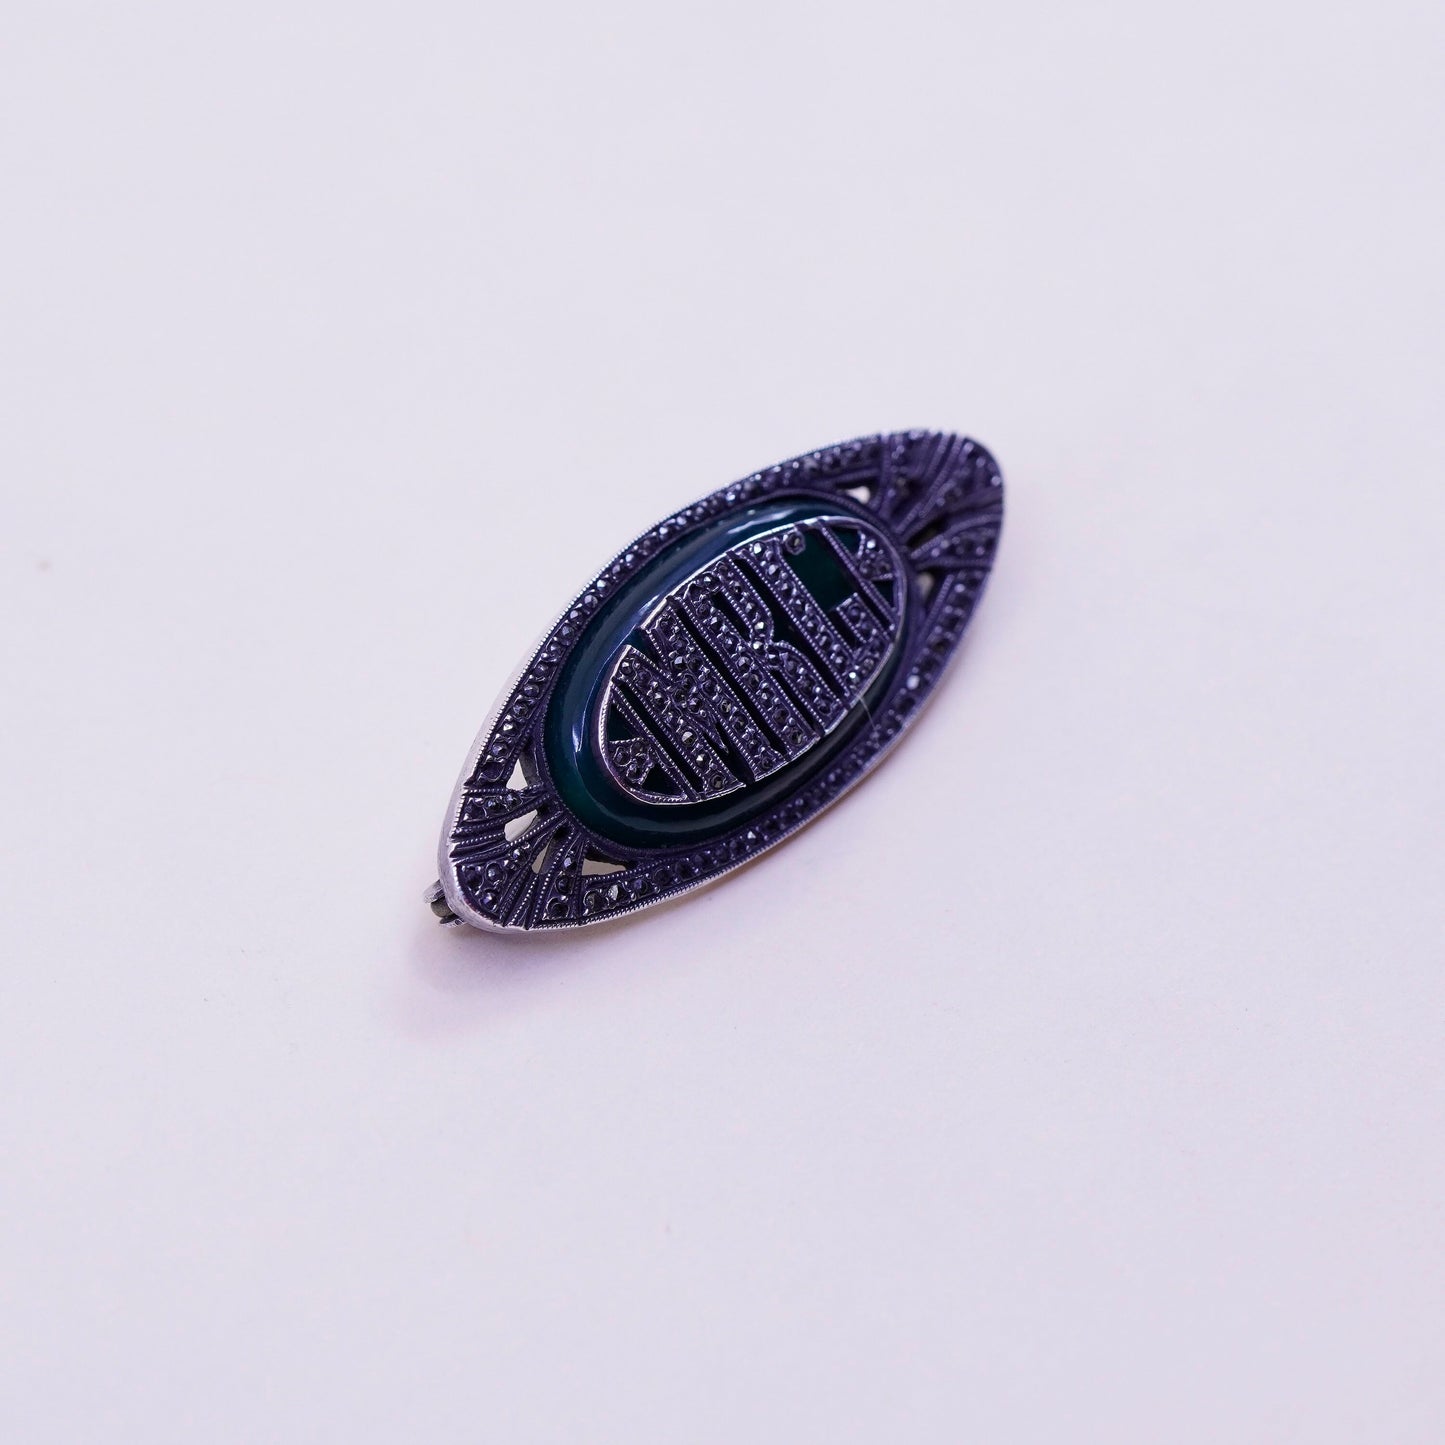 Vintage sterling silver handmade brooch pin with monogram “MRC”